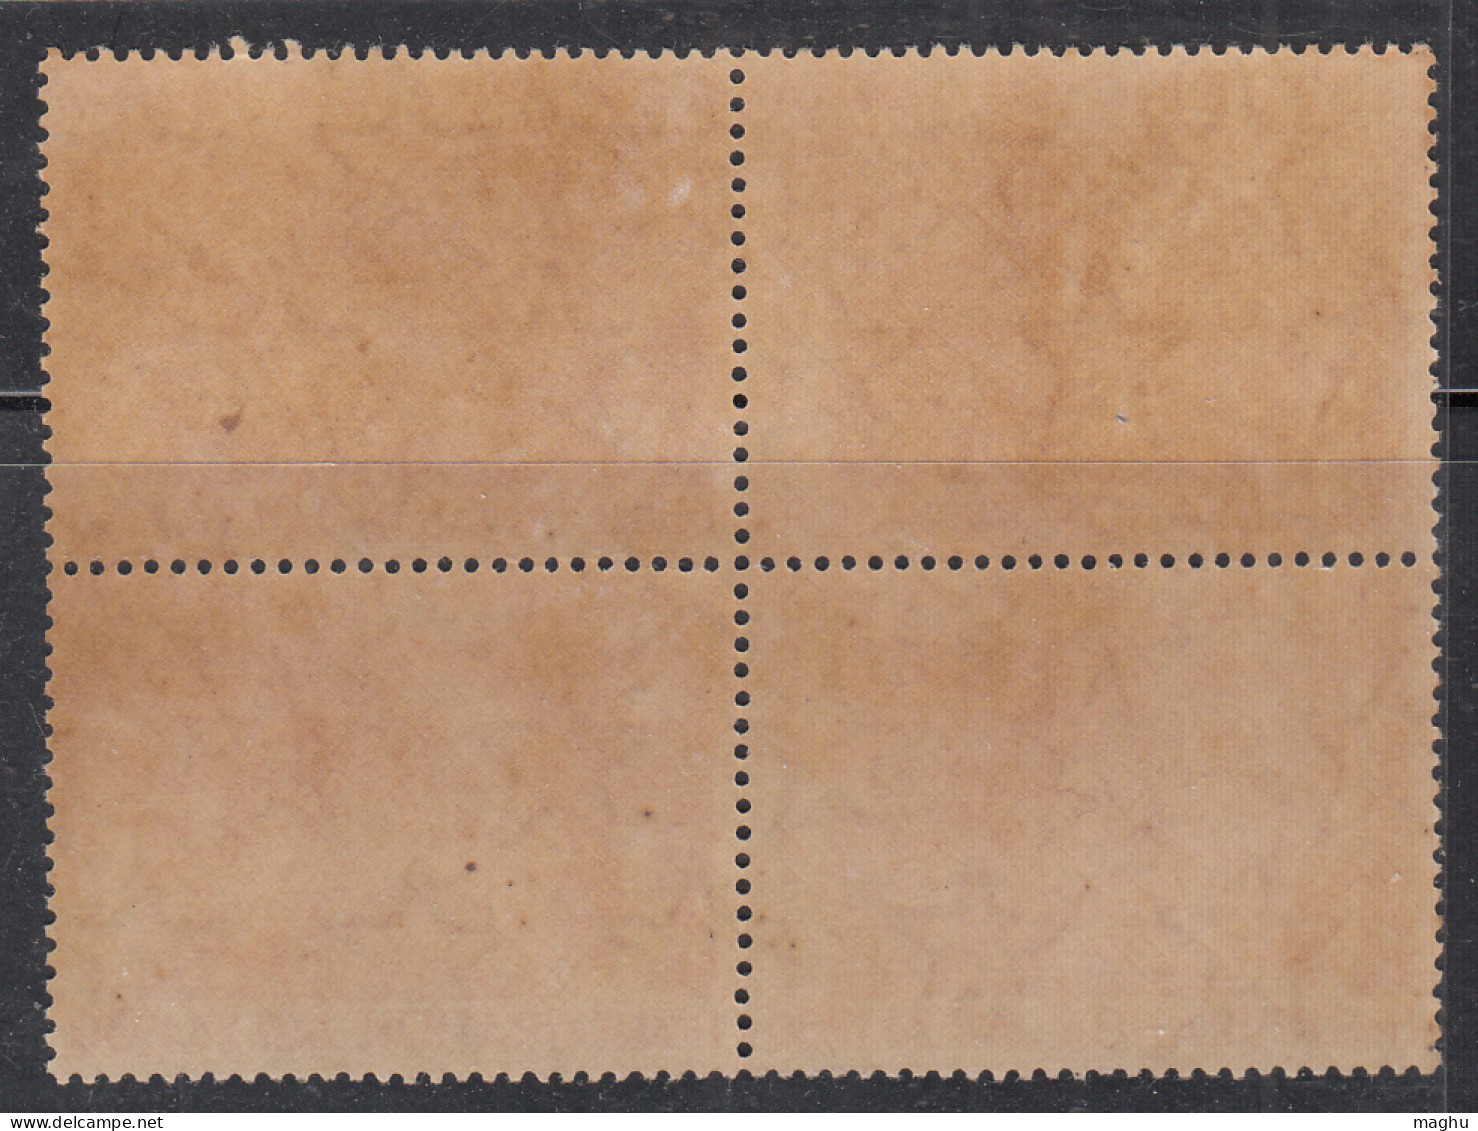 Block Of 4, 2a Republic Inaguration, India MNH 1950, Flag, Music Instrument,  - Blocks & Sheetlets